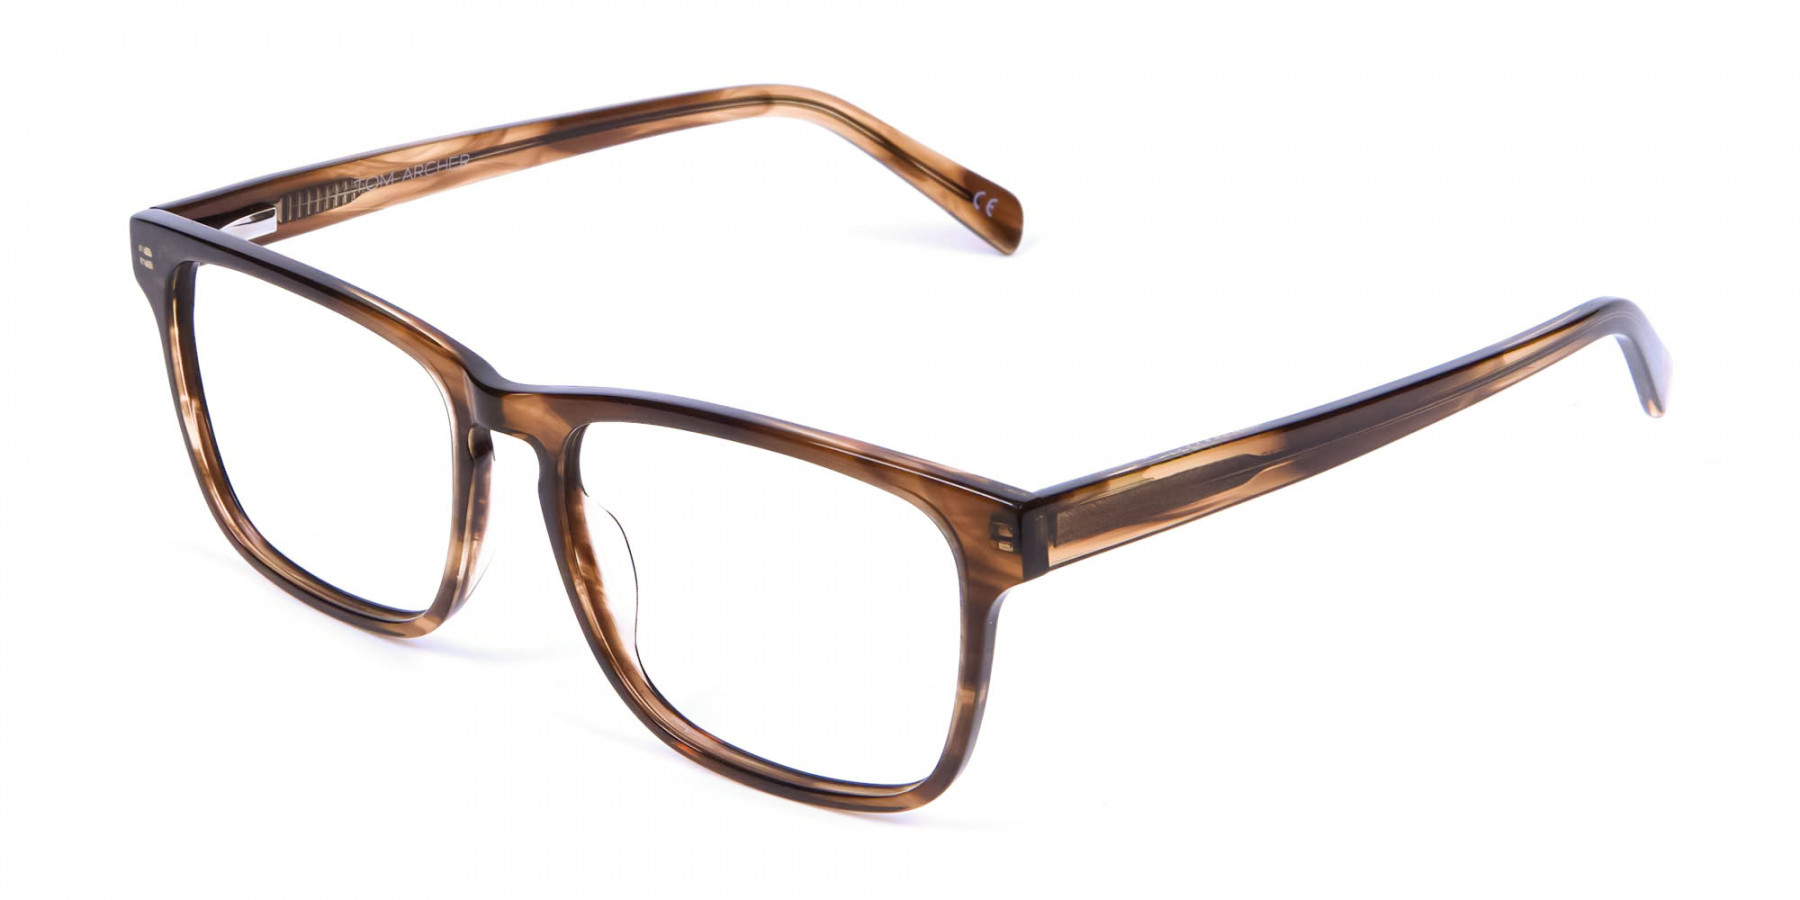 Walnut Brown Glasses in Rectangular